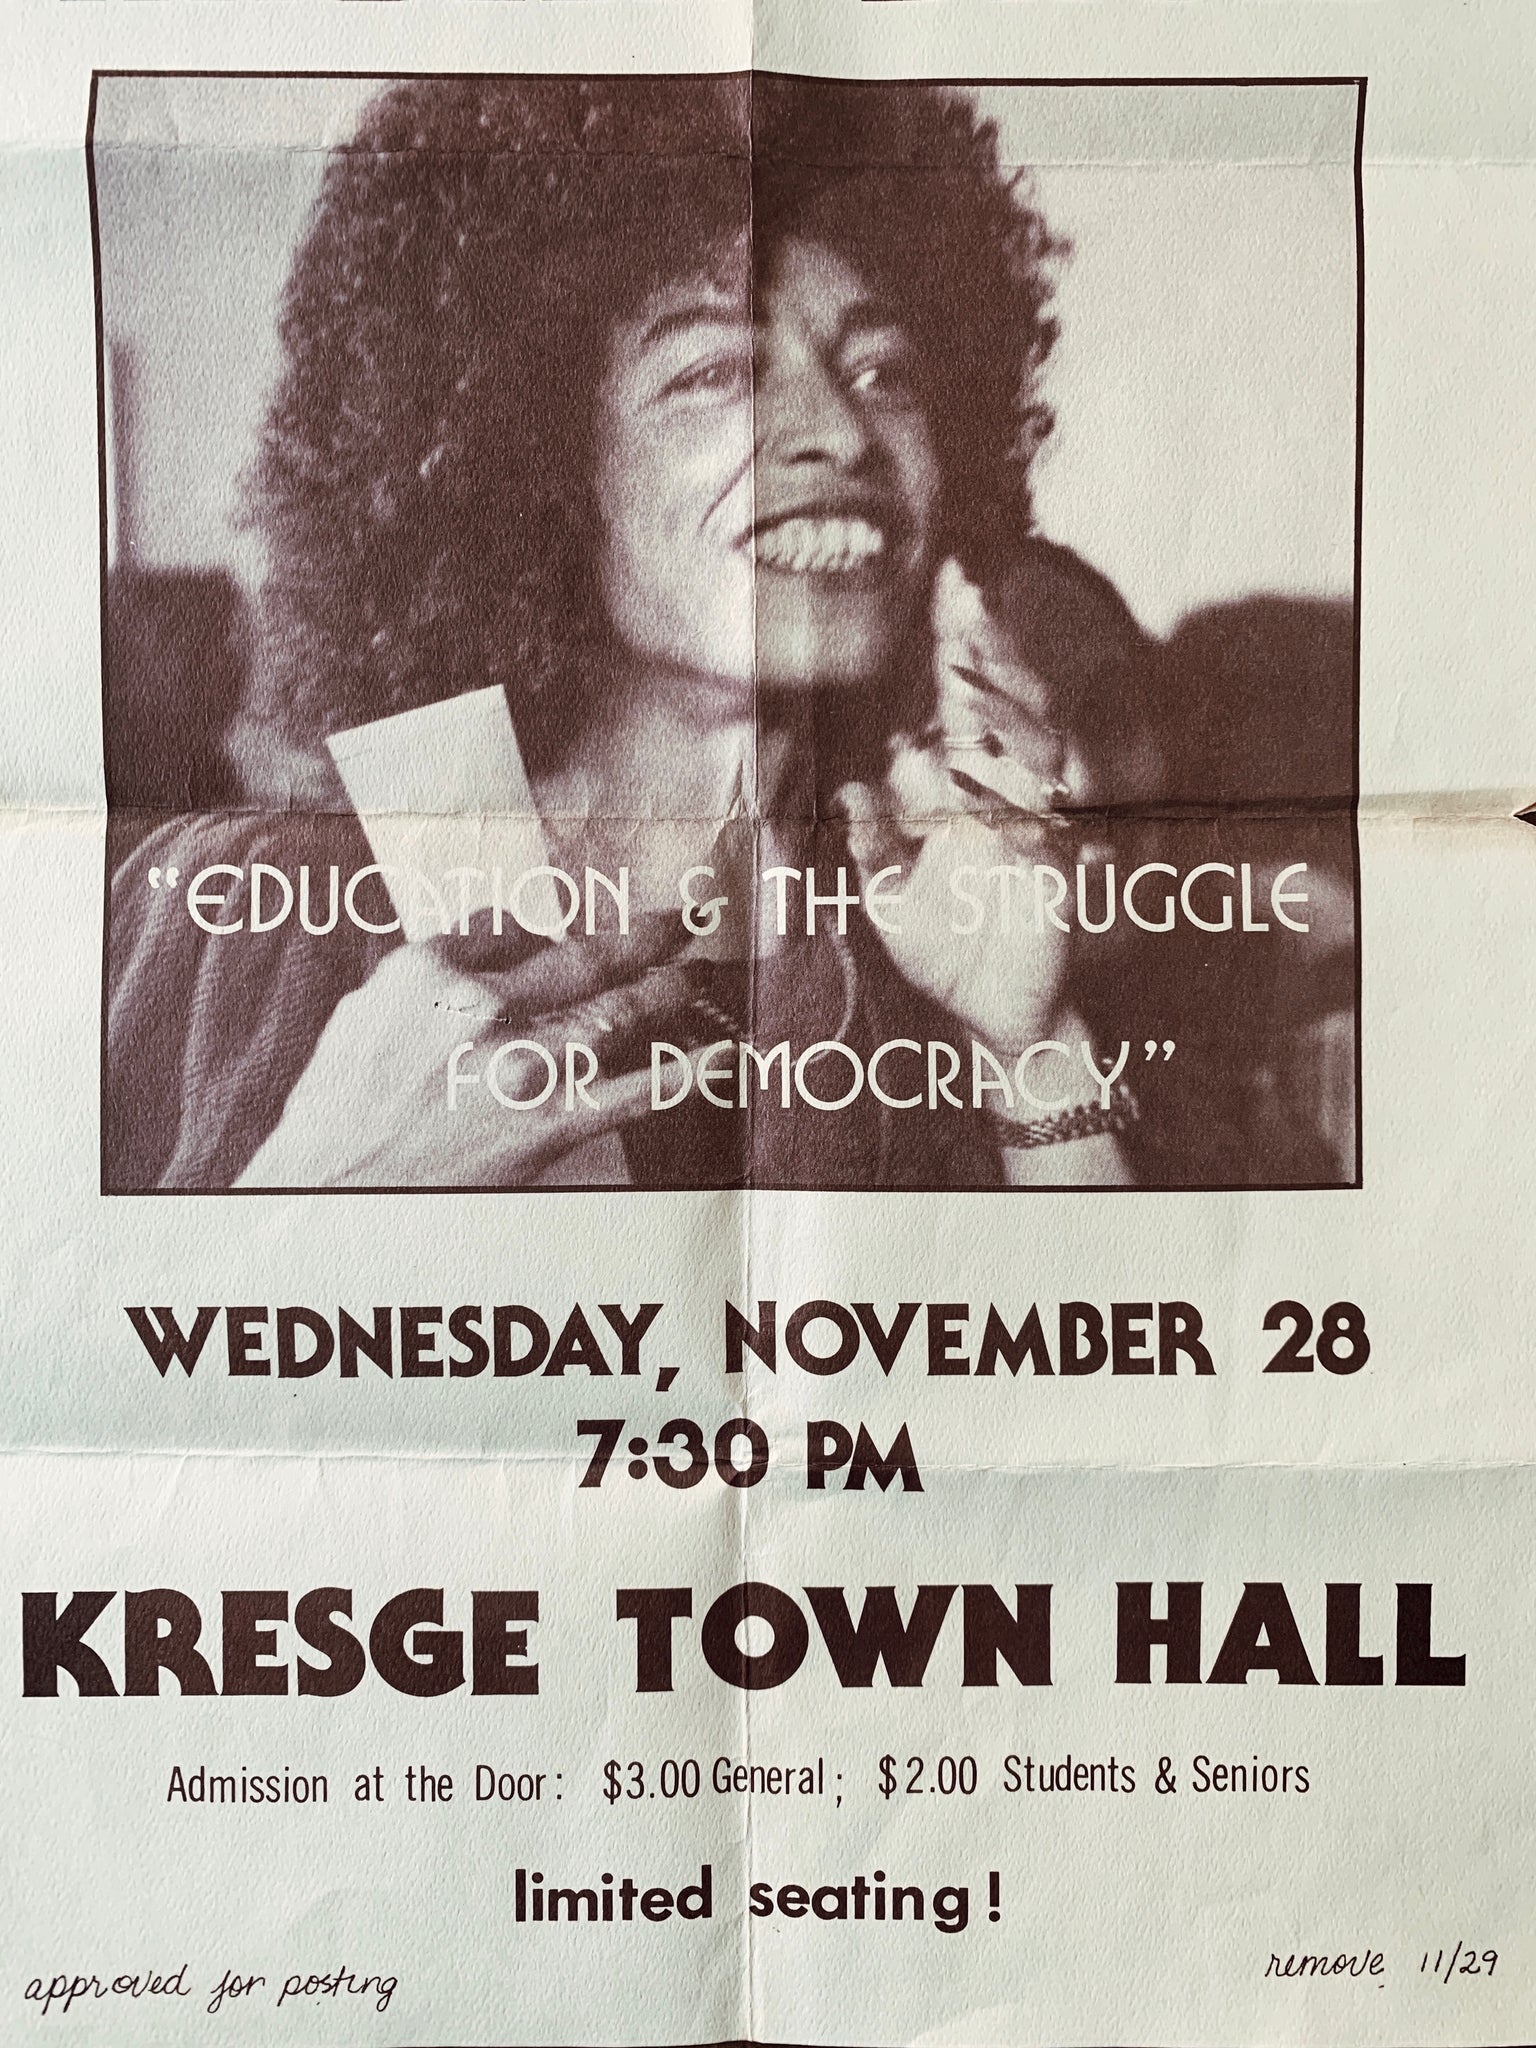 Vintage Angela Davis UC Santa Cruz Speech Poster (1970's)